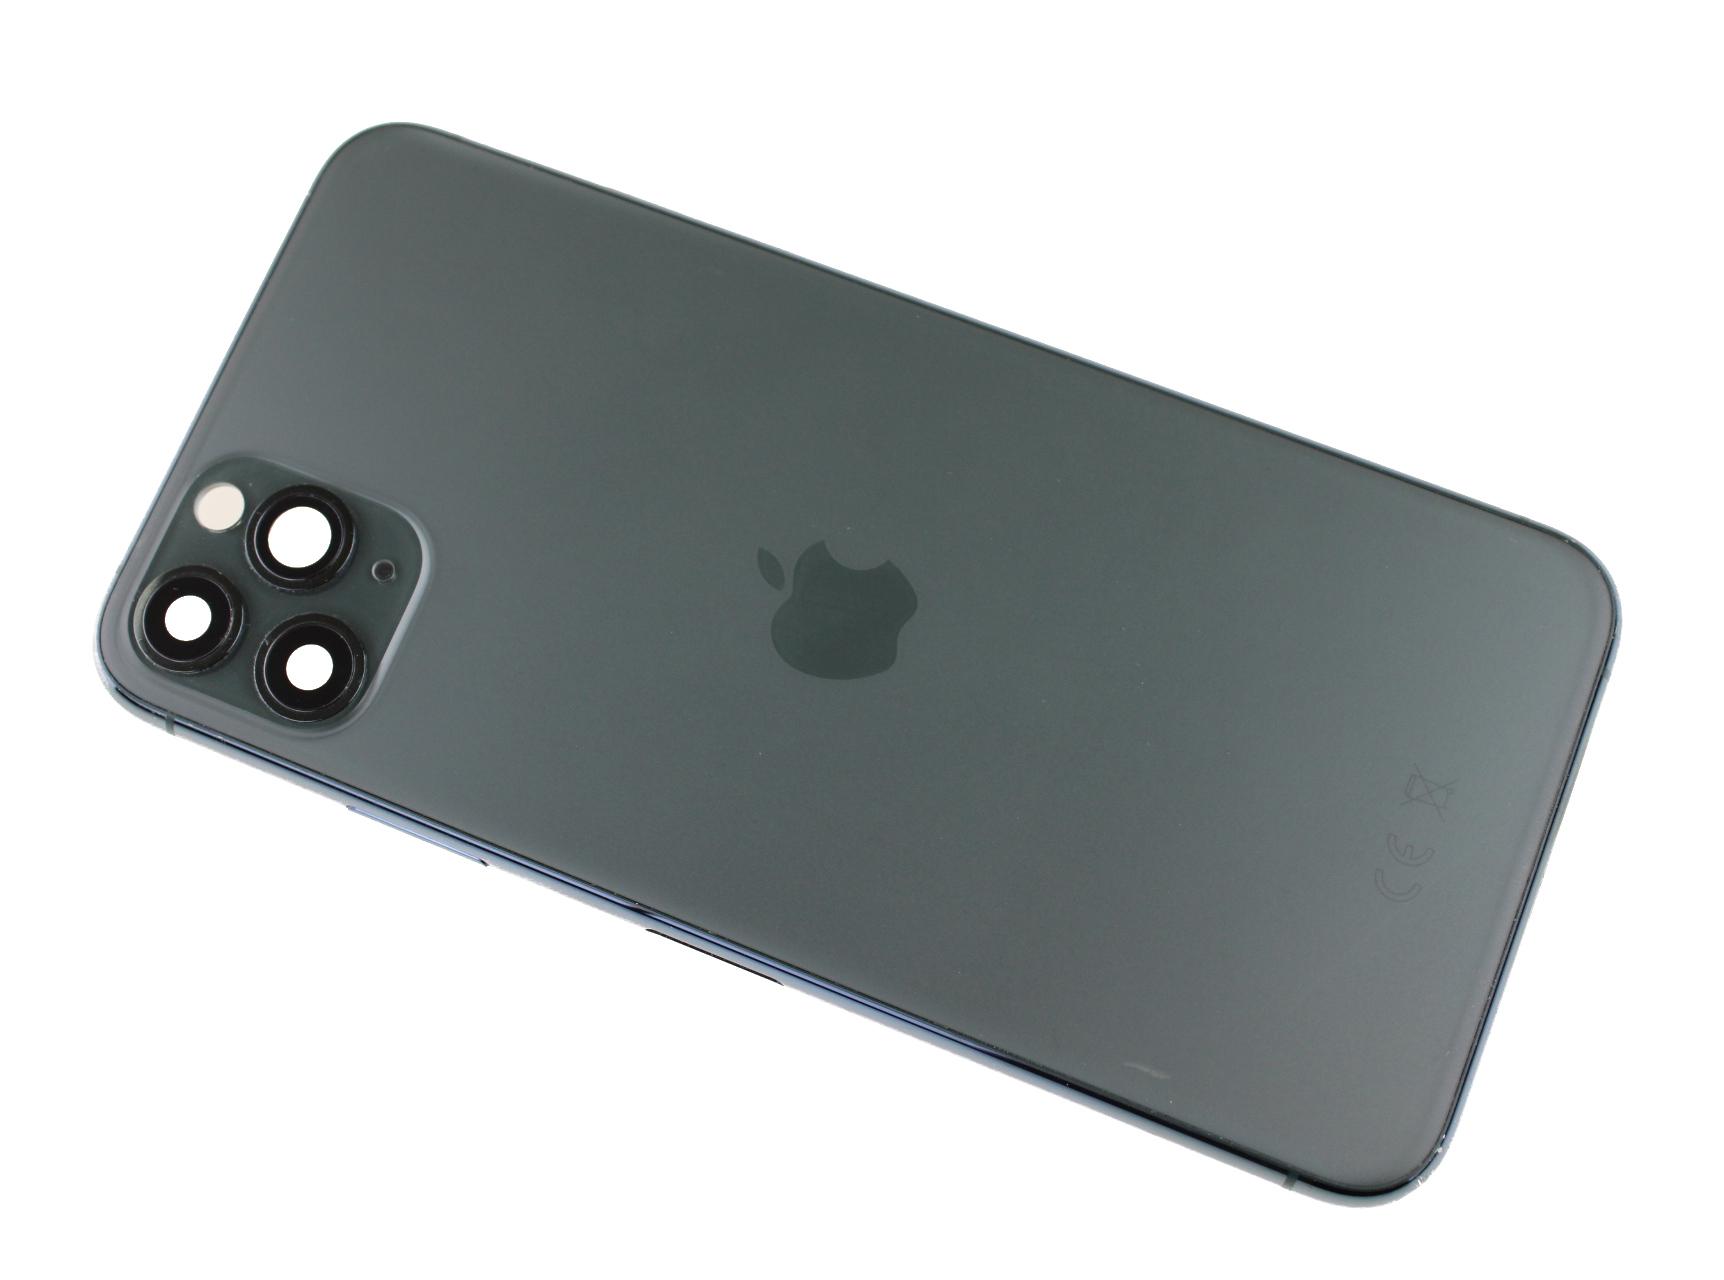 Originál korpus iPhone 11 Pro Max zelený - demontovaný produkt